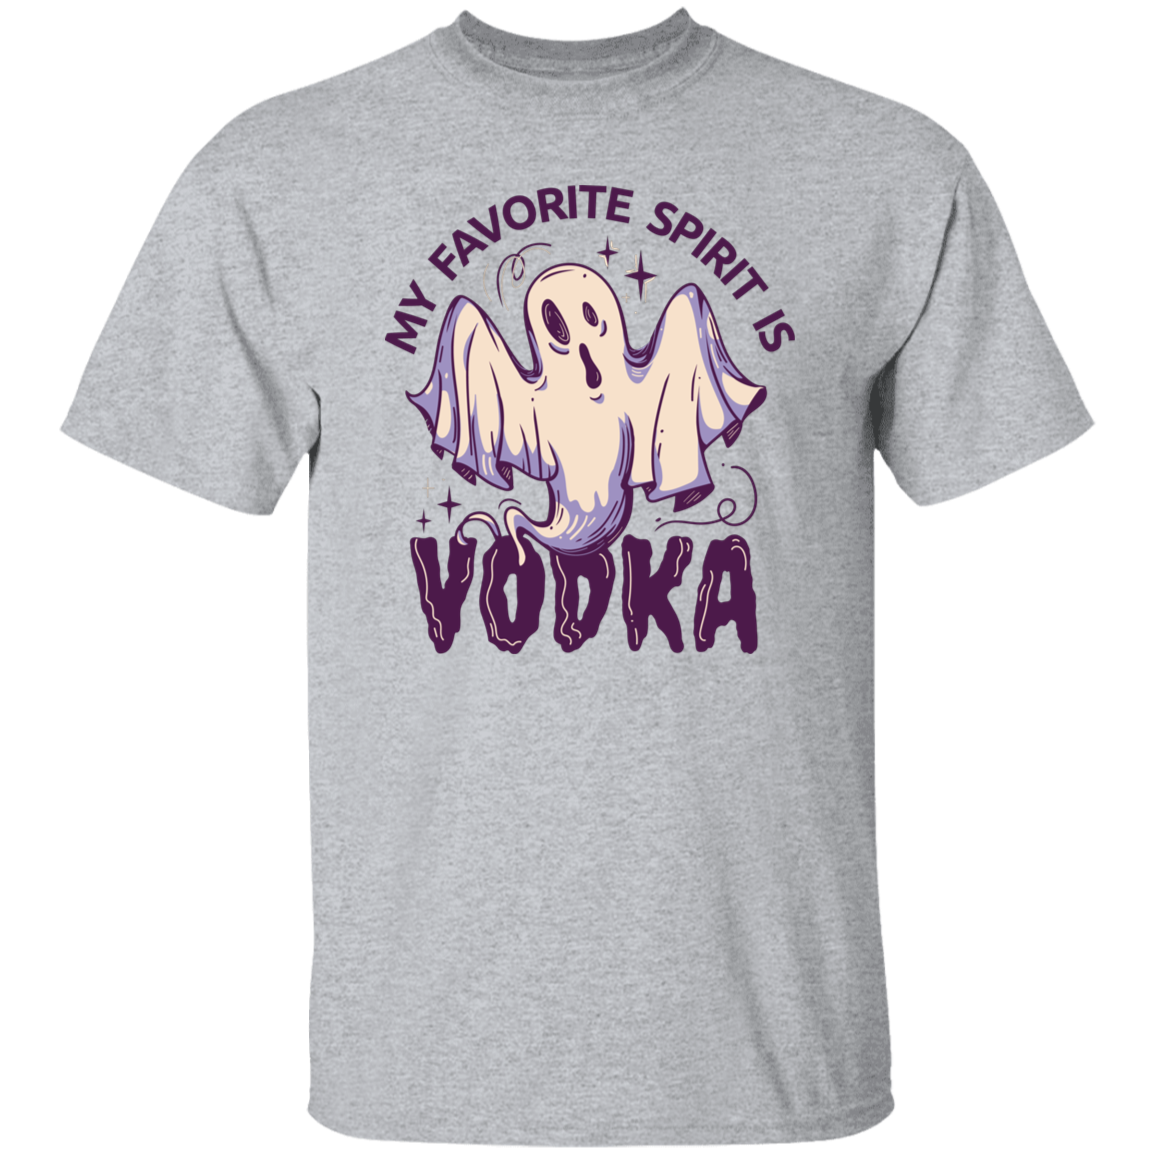 My Favorite Spirit is Vodka T-shirt T-Shirts CustomCat Sport Grey S 